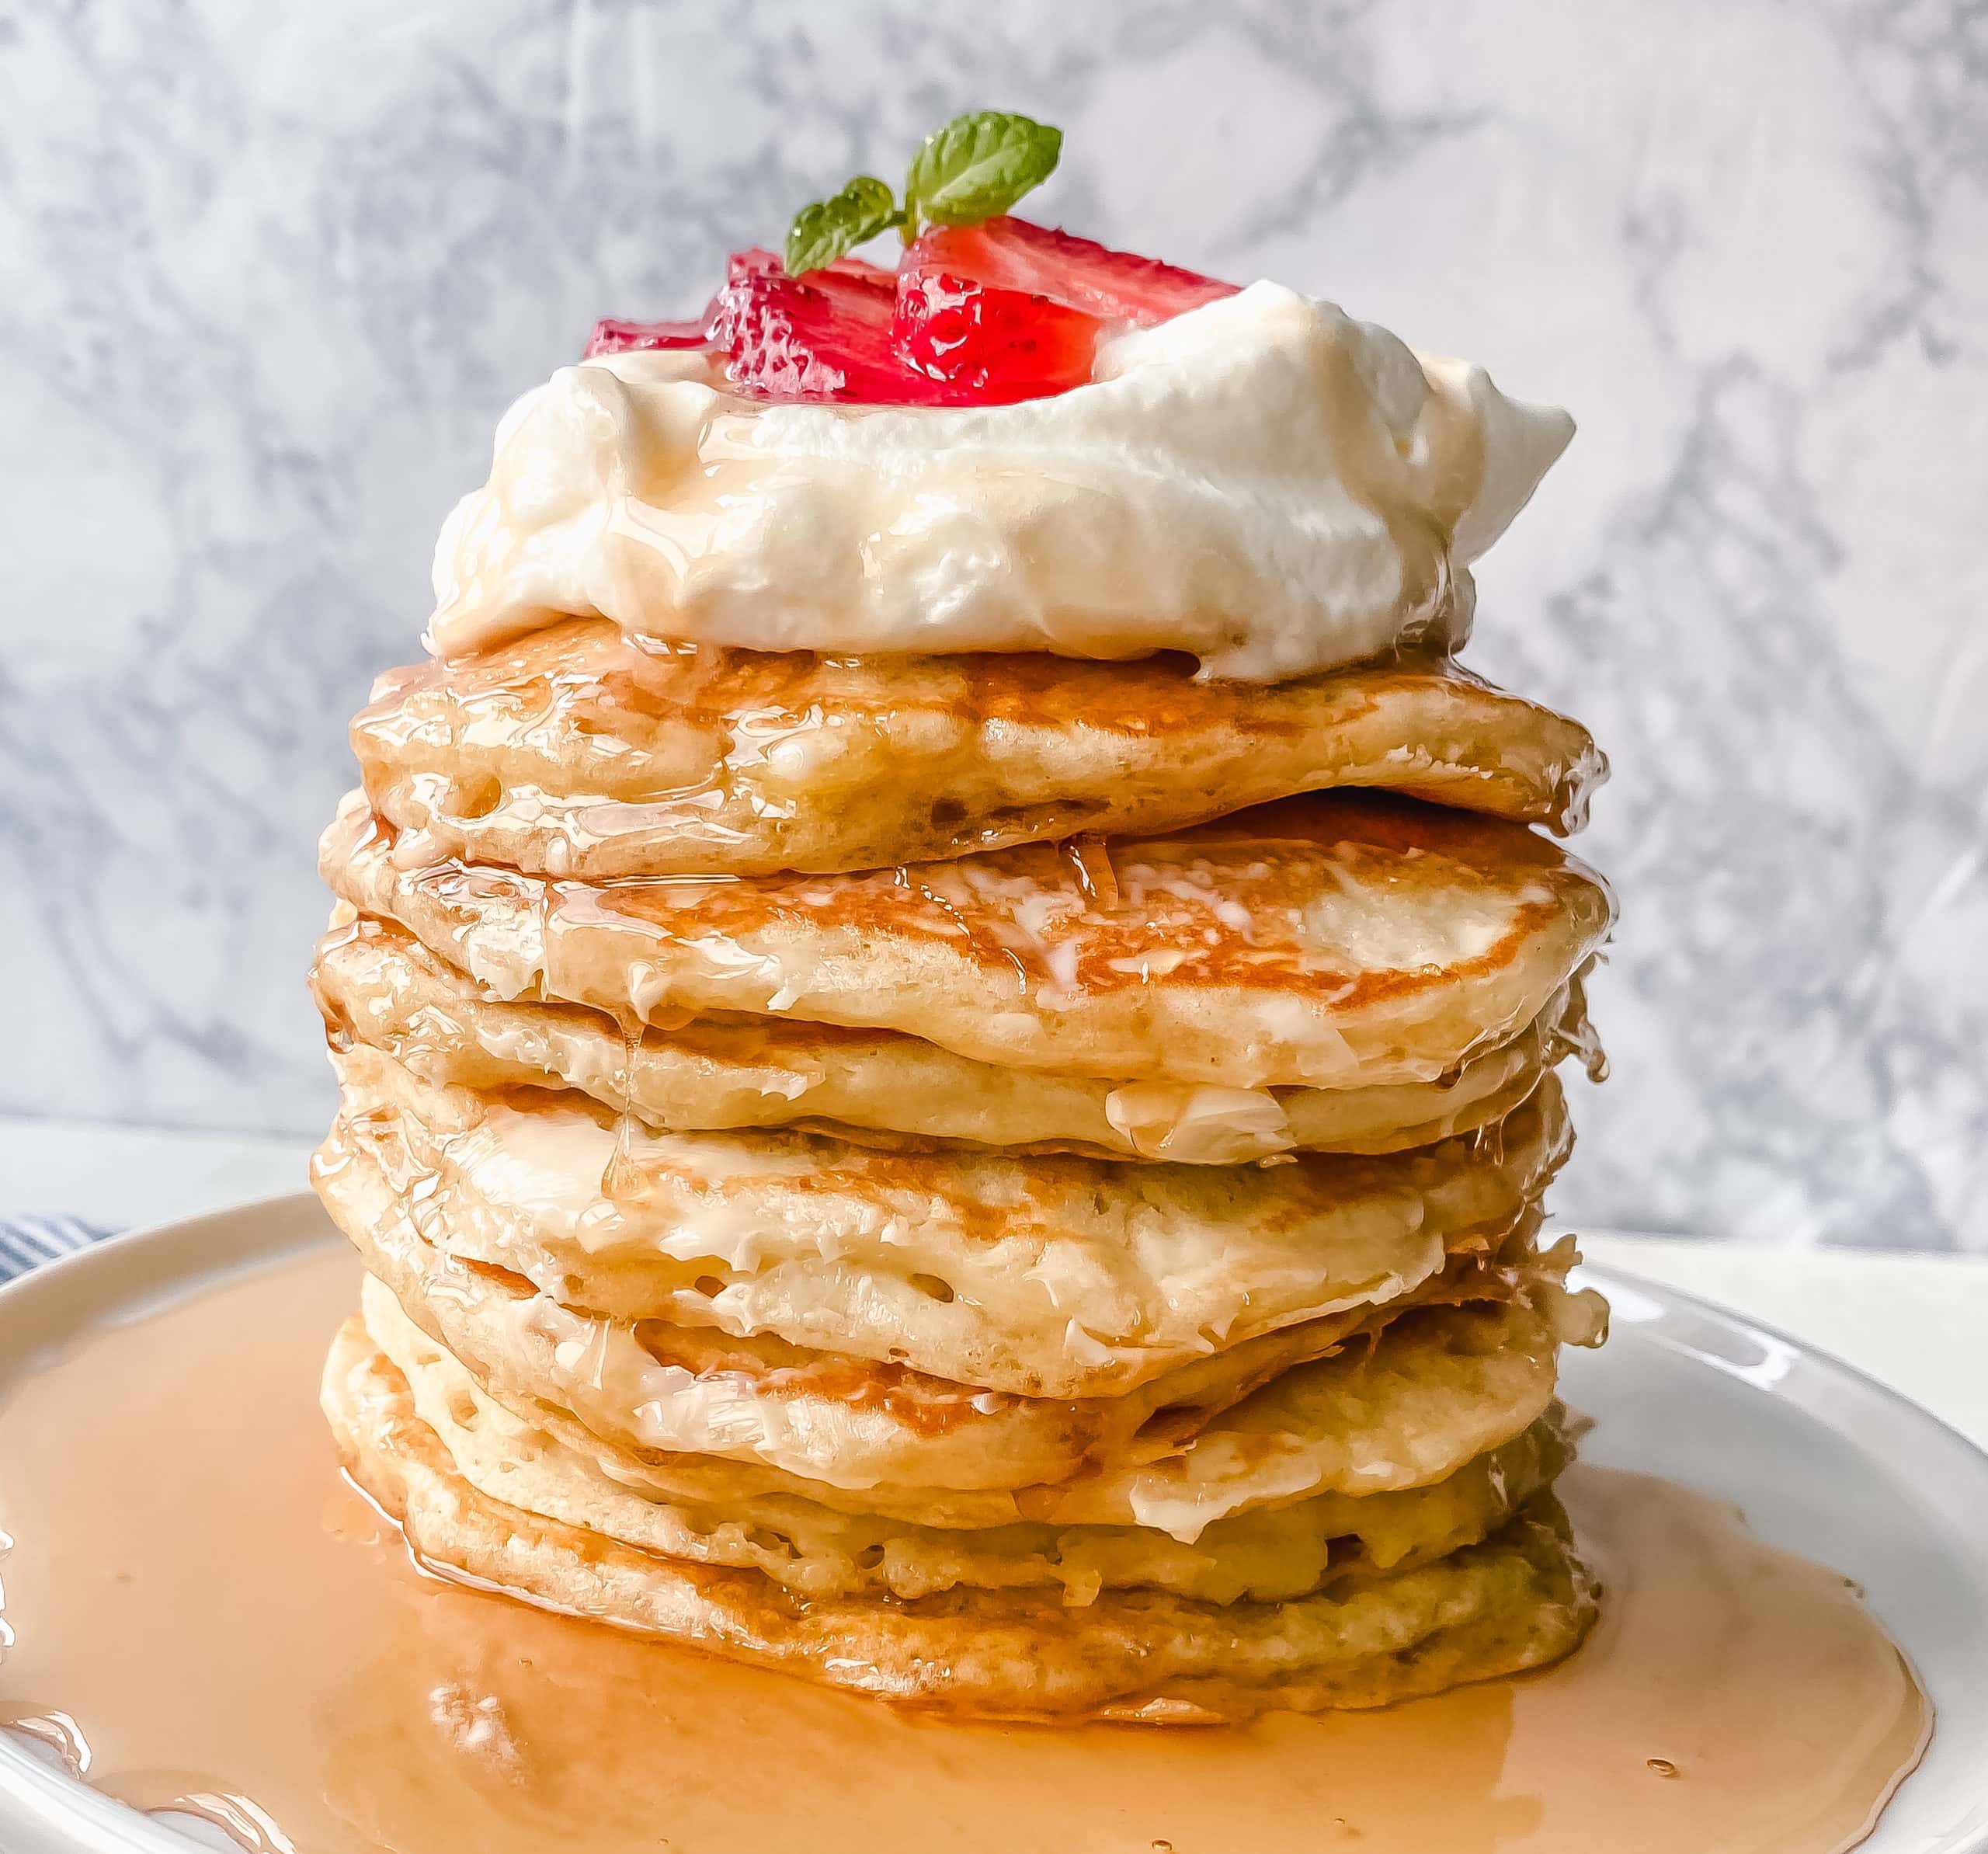 https://www.modernhoney.com/wp-content/uploads/2017/02/Best-Buttermilk-Pancakes-4-edit-scaled.jpg